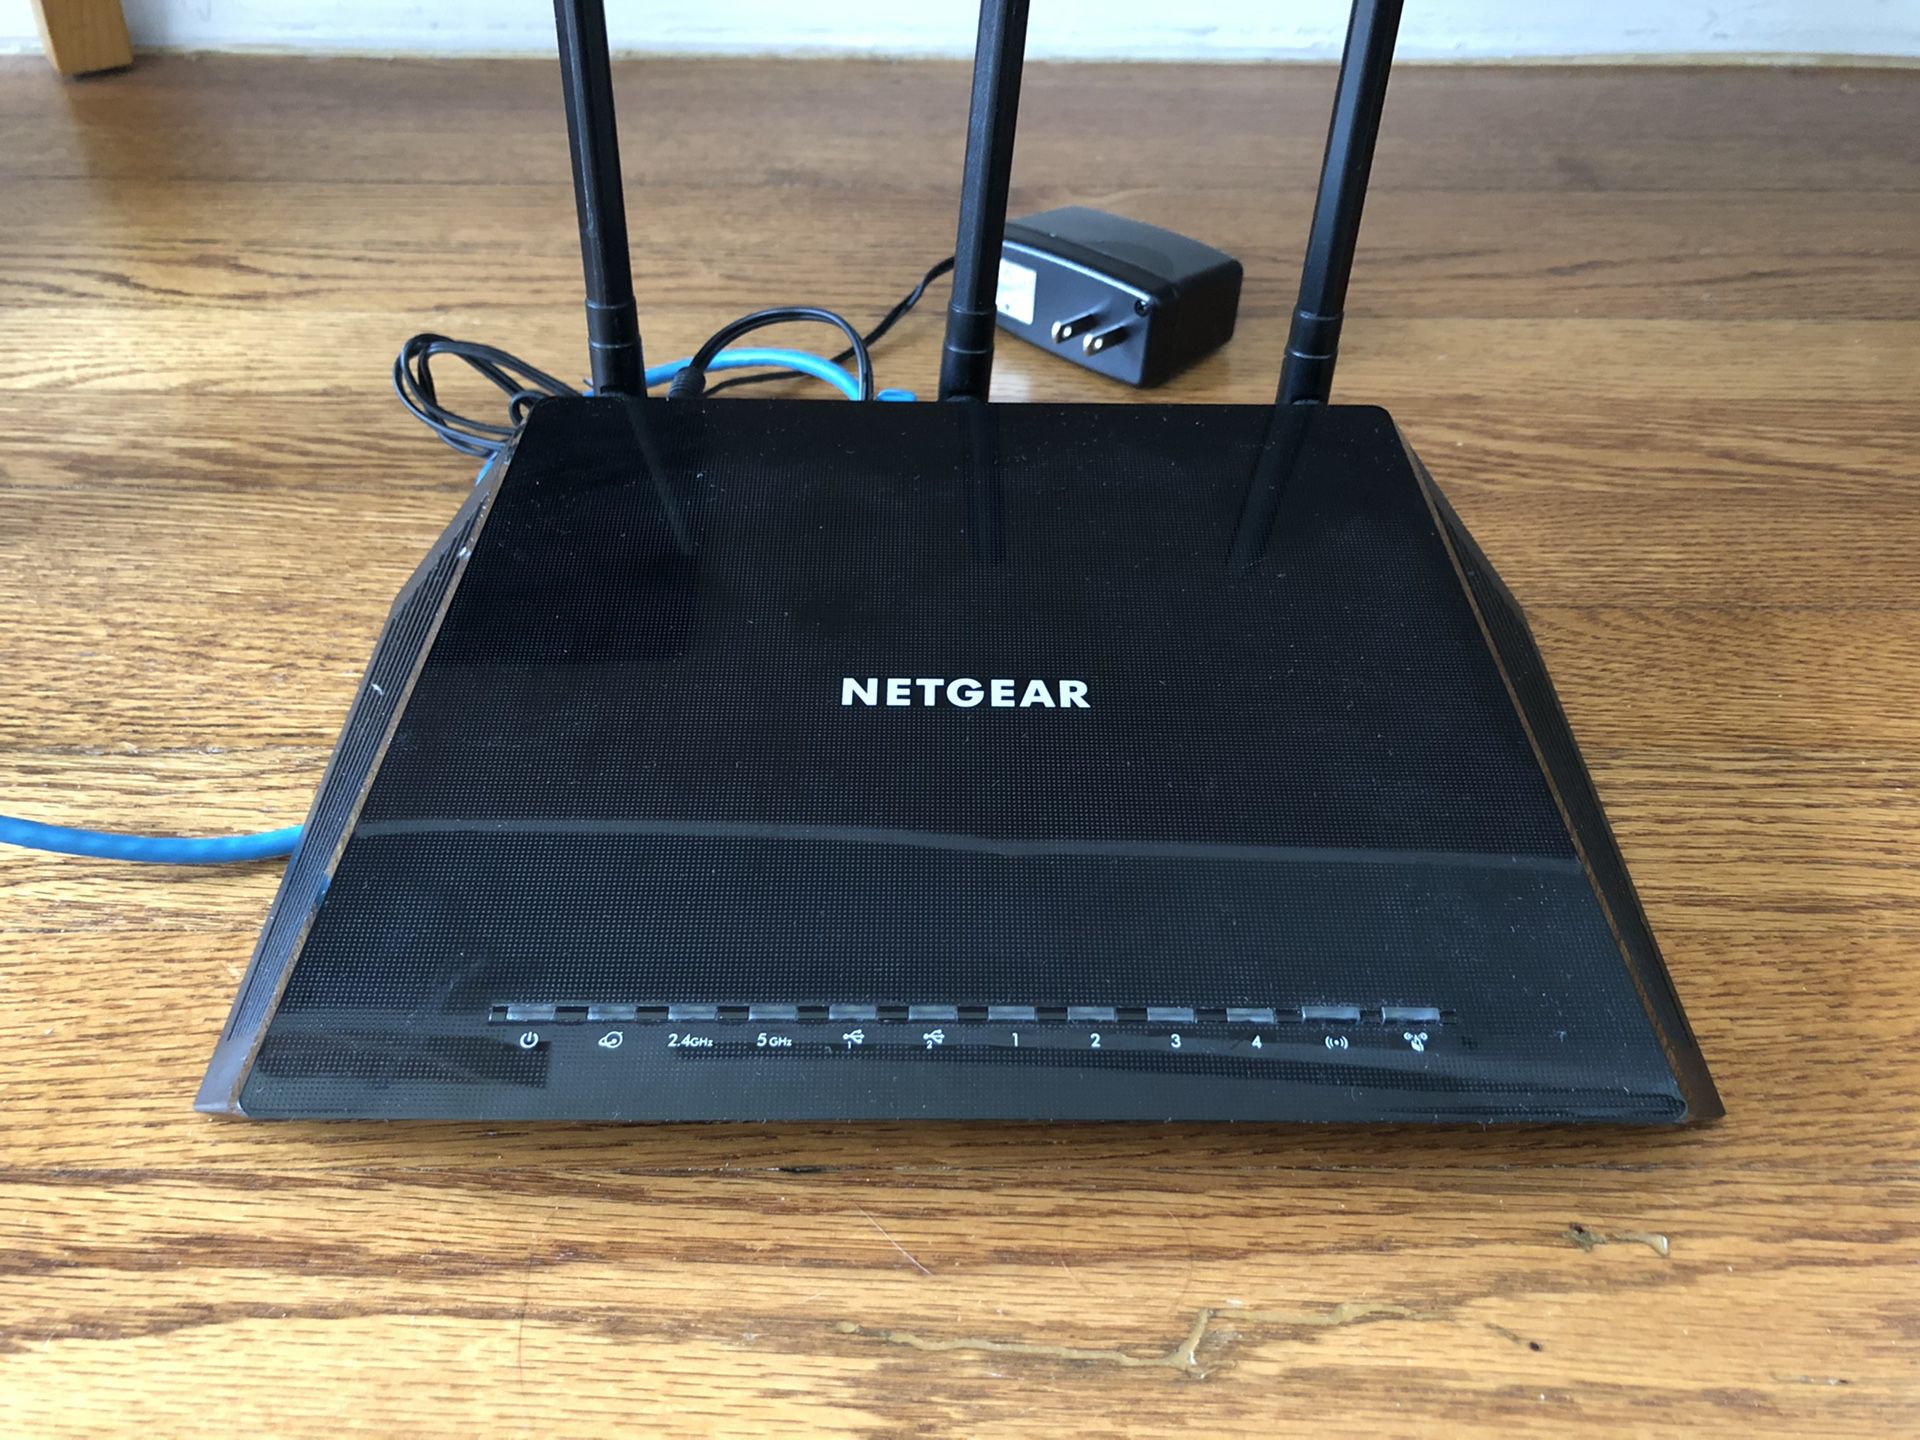 Netgear router AC1750 model R6400